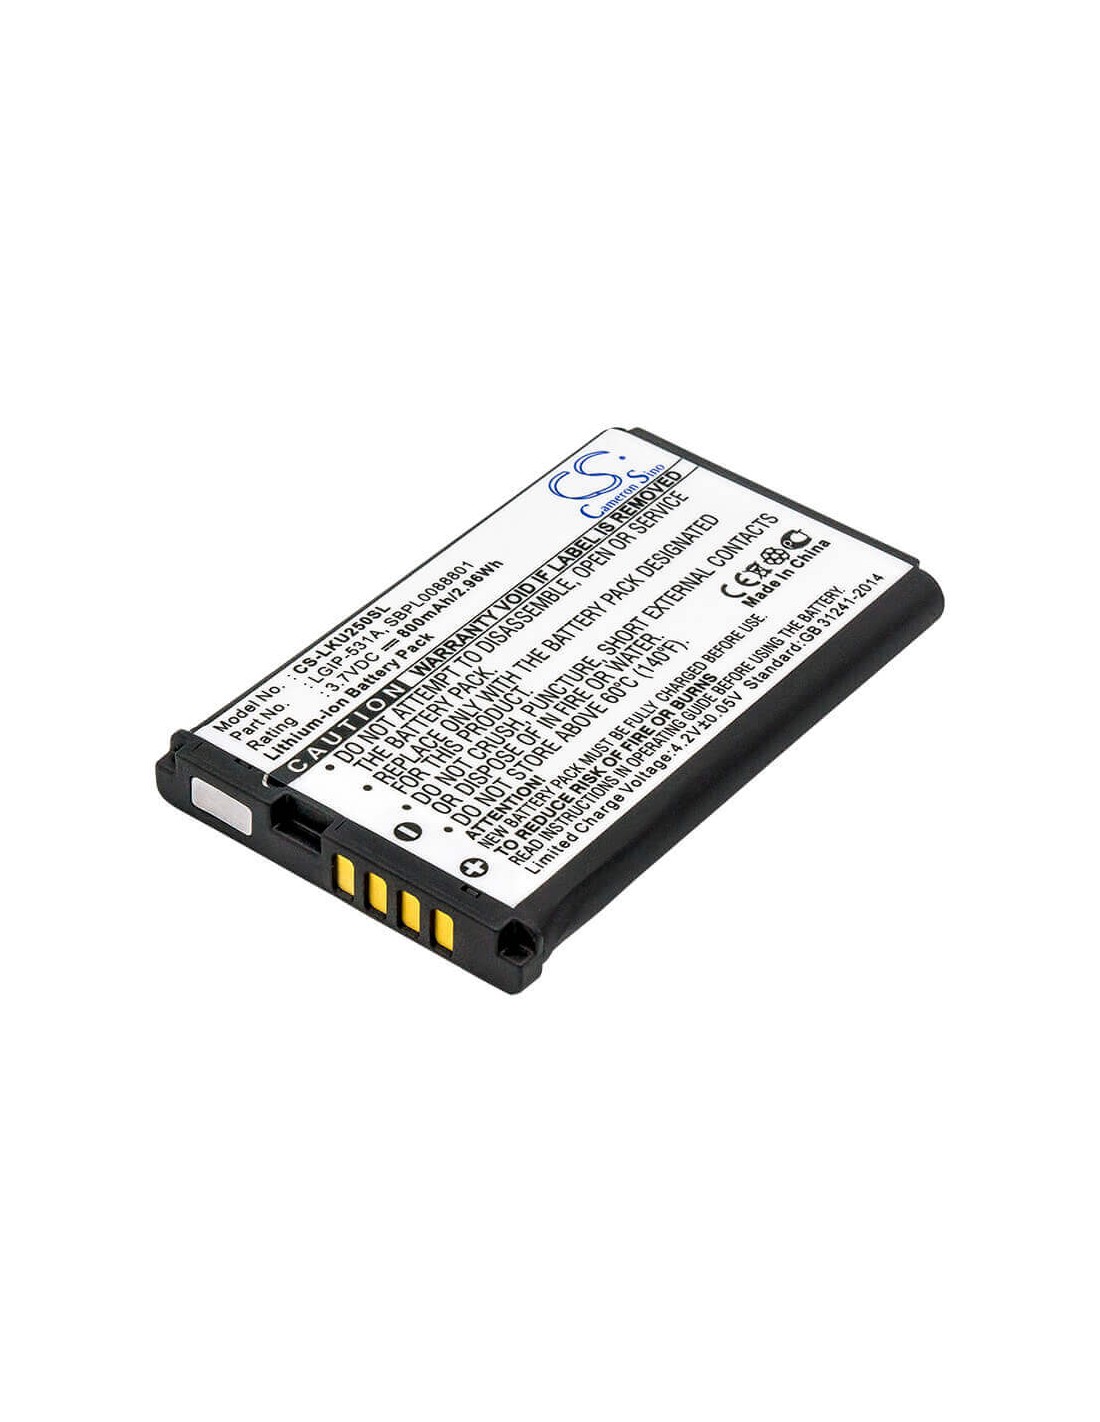 Battery for LG GB100, GB101, GB106 3.7V, 800mAh - 2.96Wh